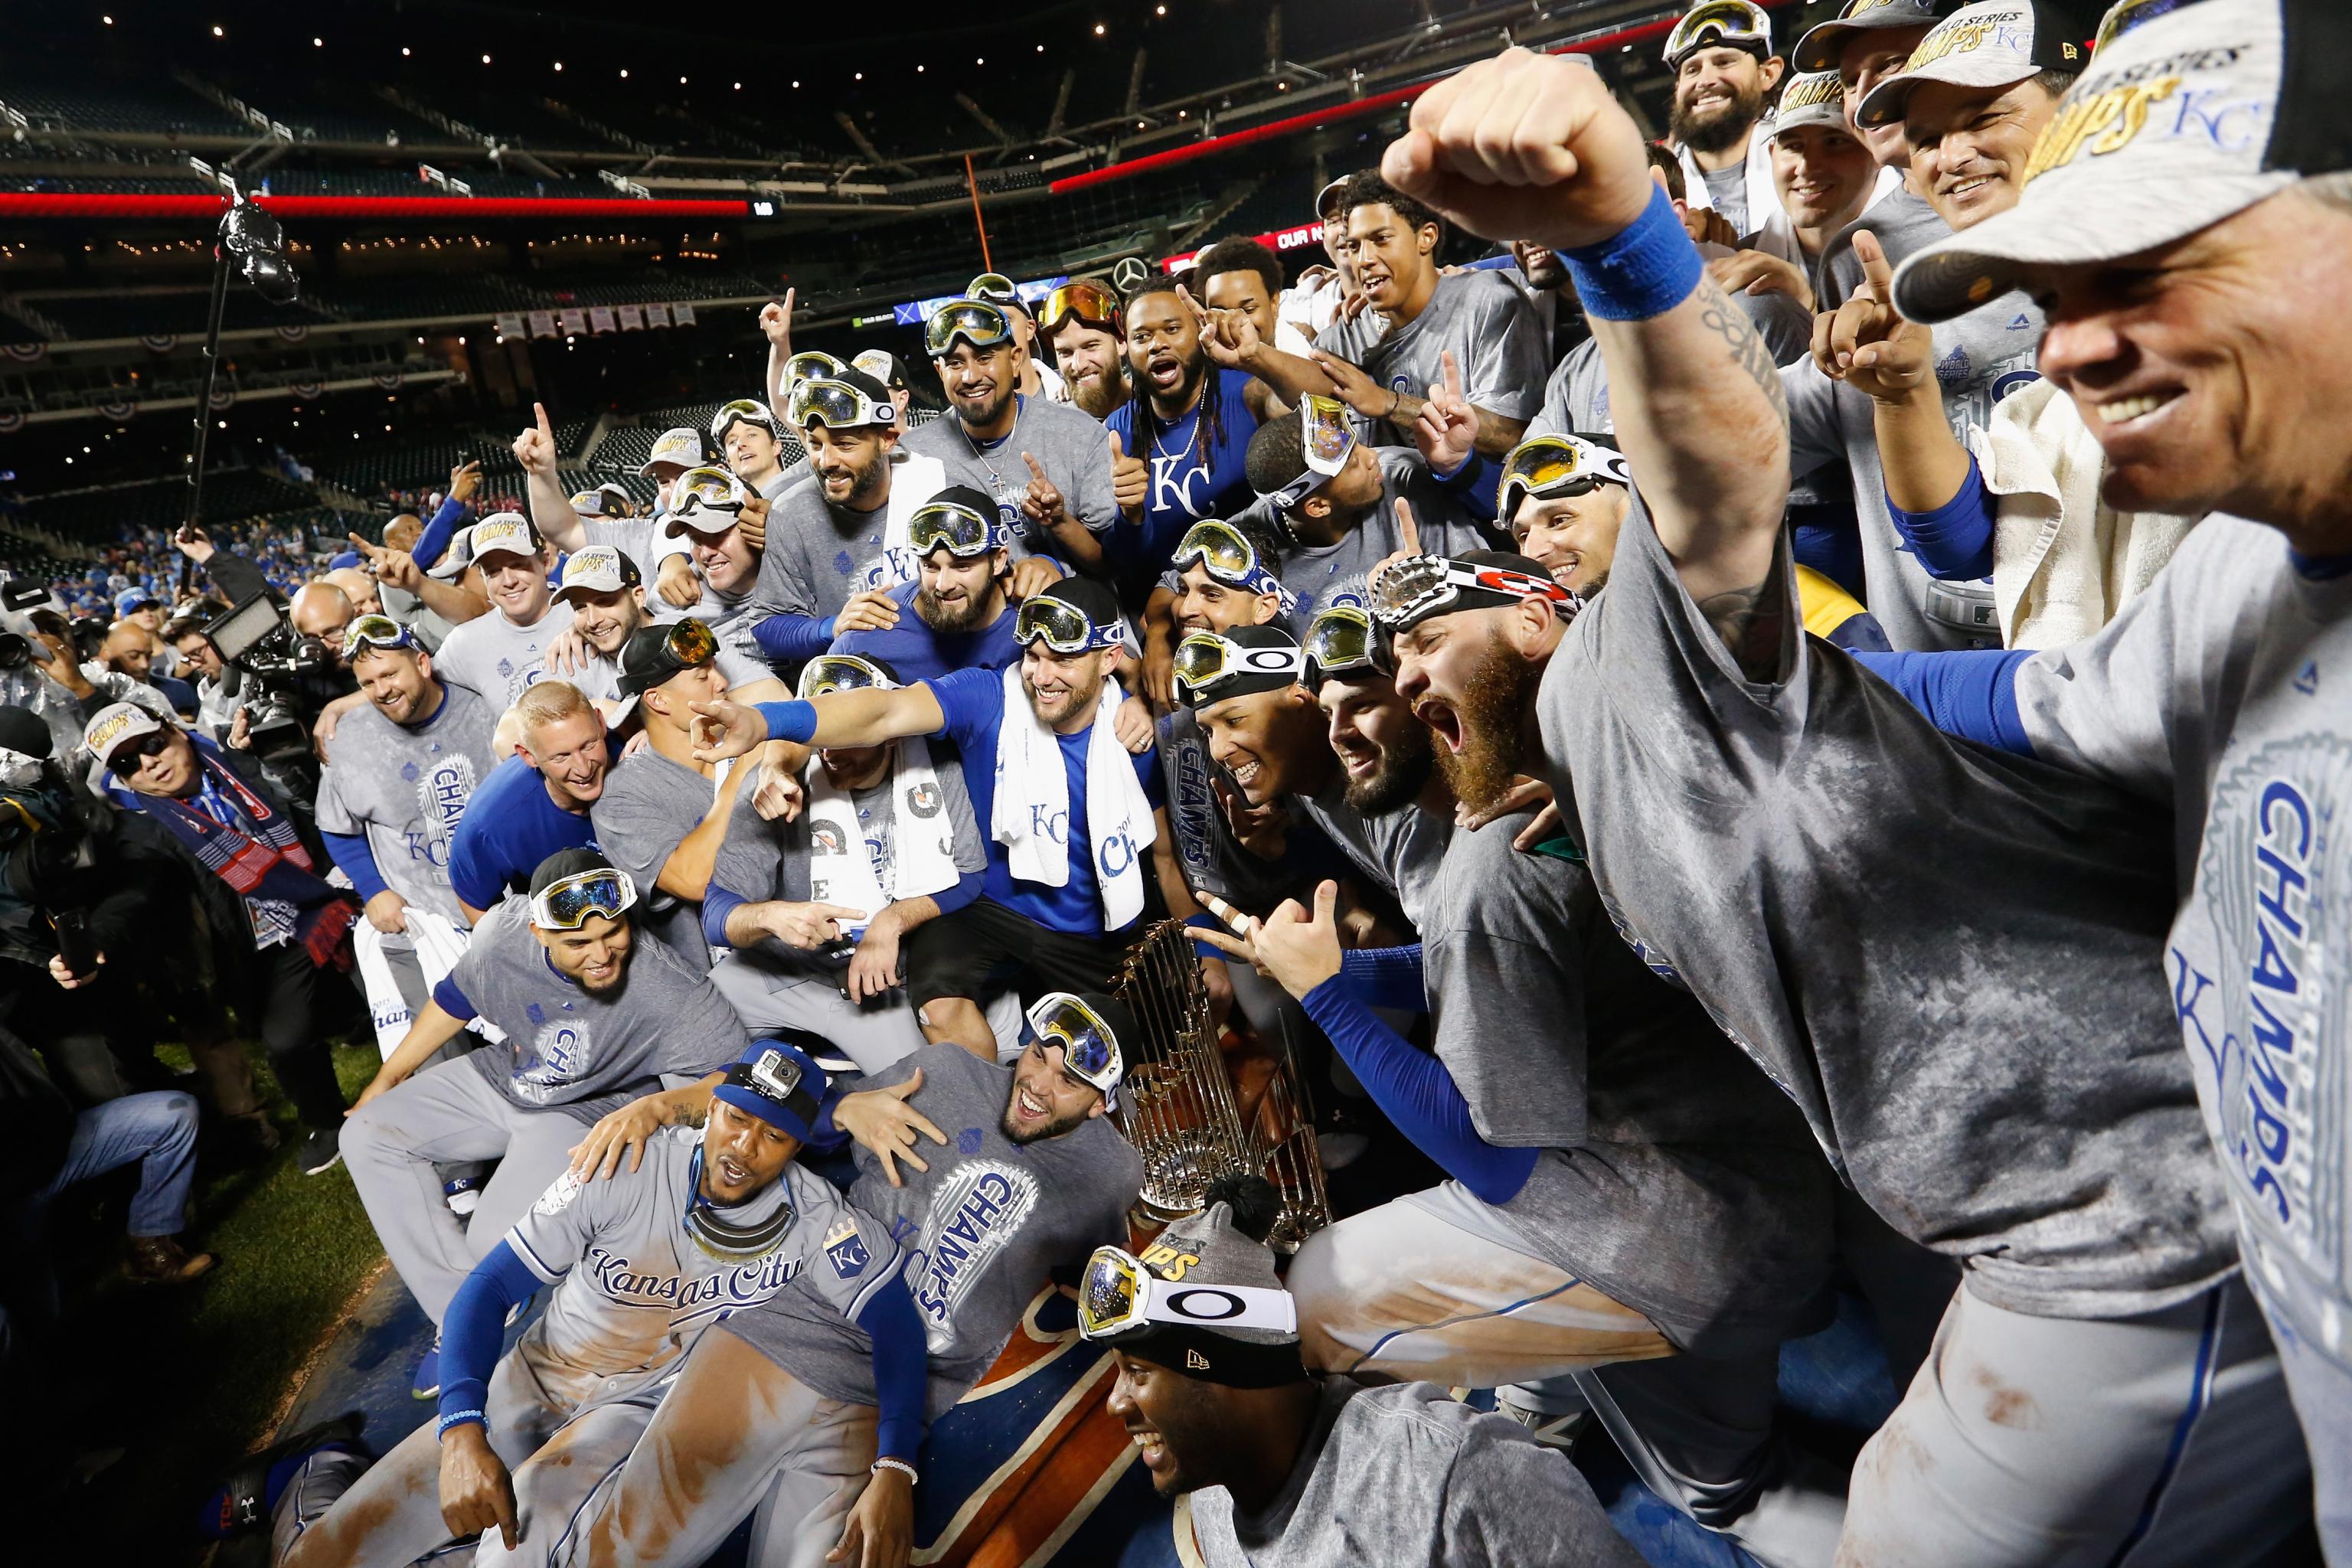 Kansas City celebrates Royals' World Series championship with victory parade  - ESPN